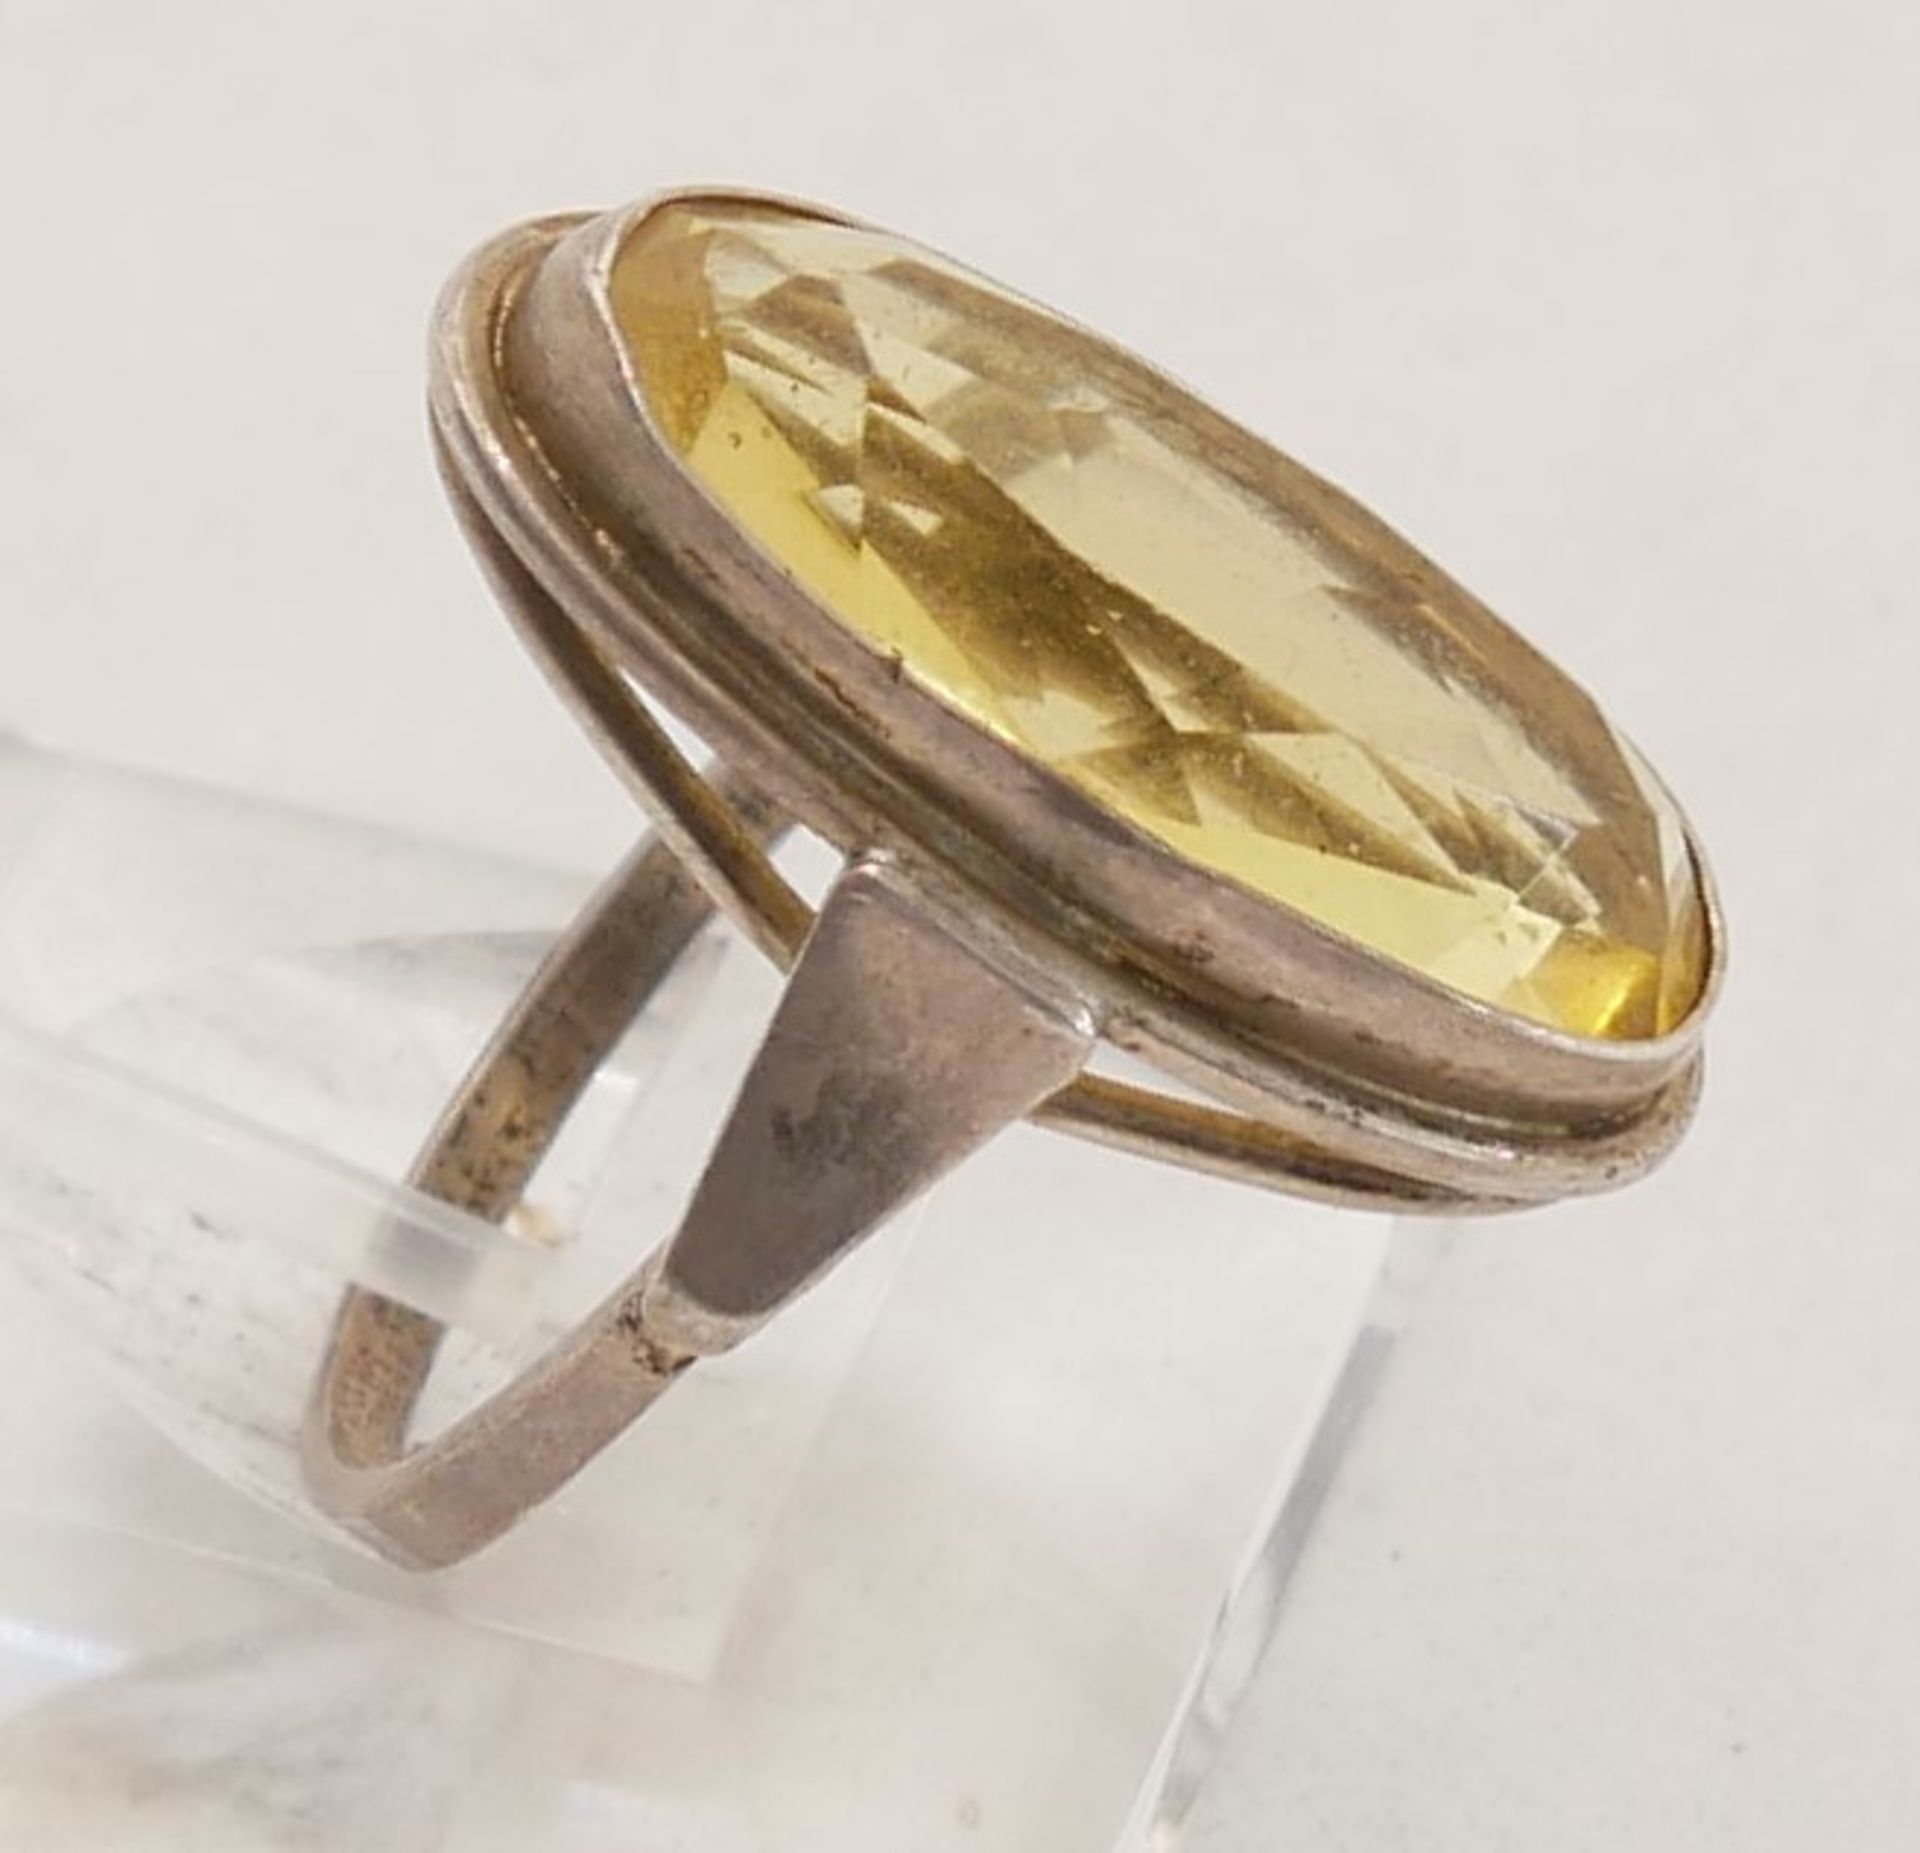 Damenring Silber mit großem Citrin, Ringgröße 62, gepunzt 835er Silber. - Image 2 of 2